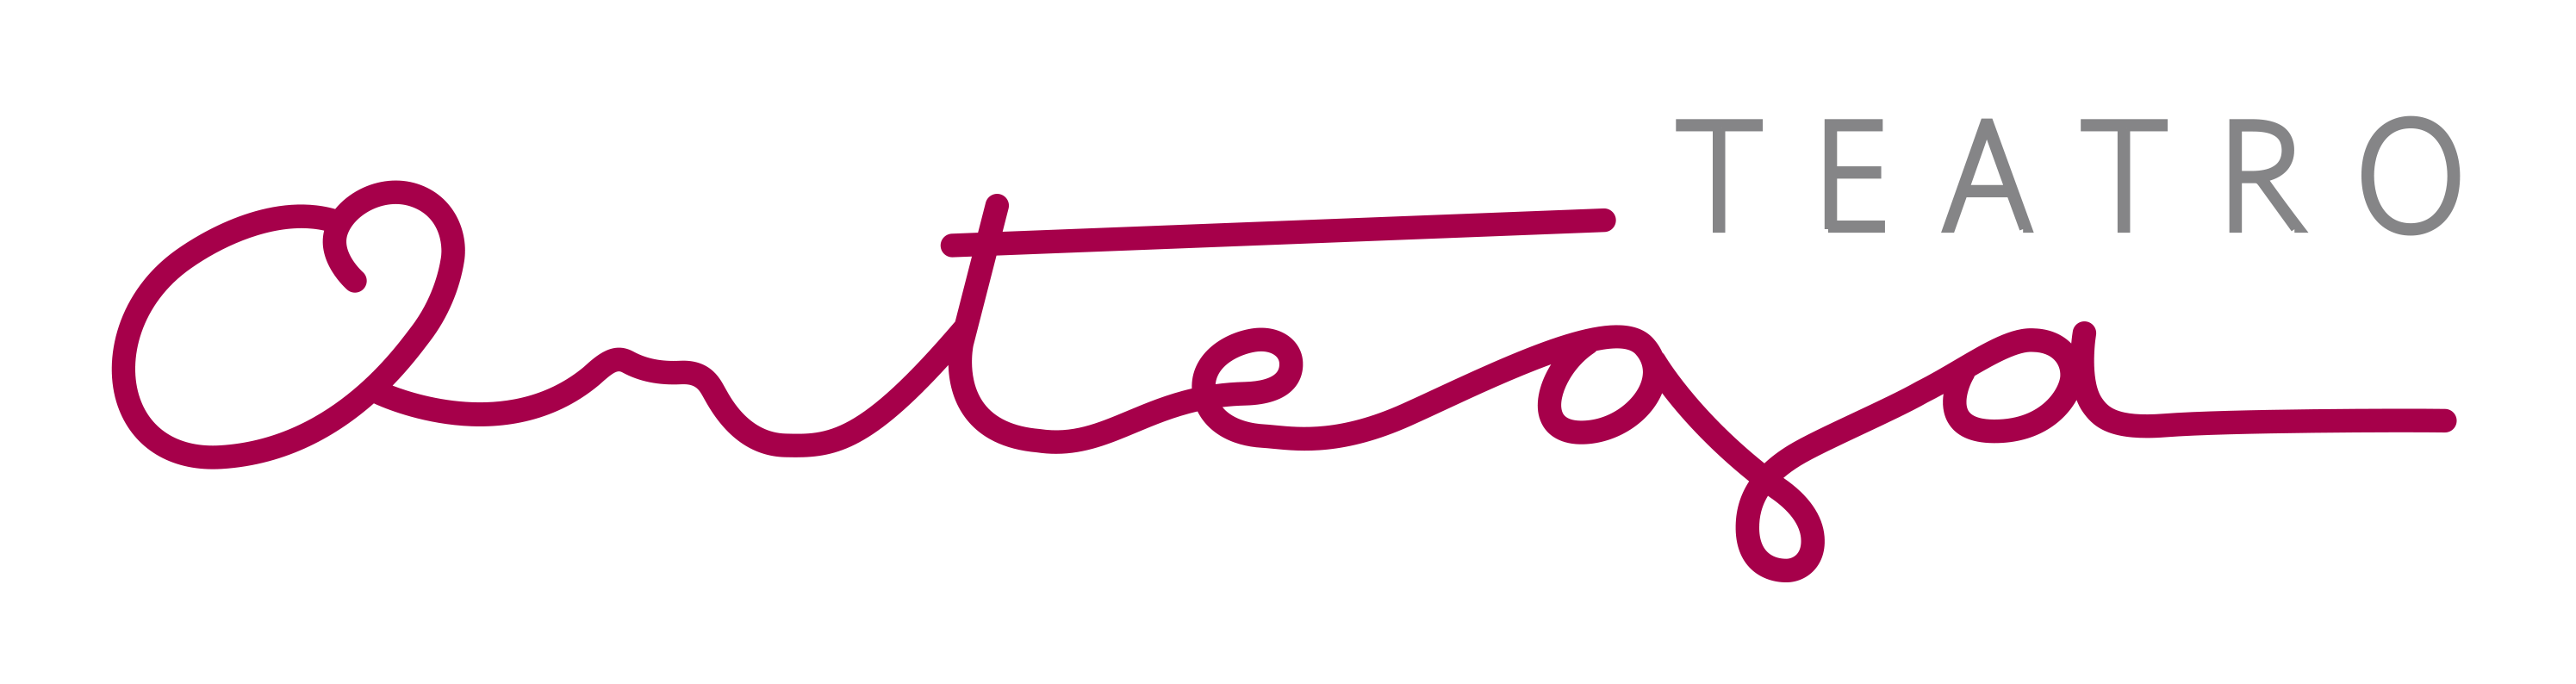 Logotipo Teatro Ortega a color